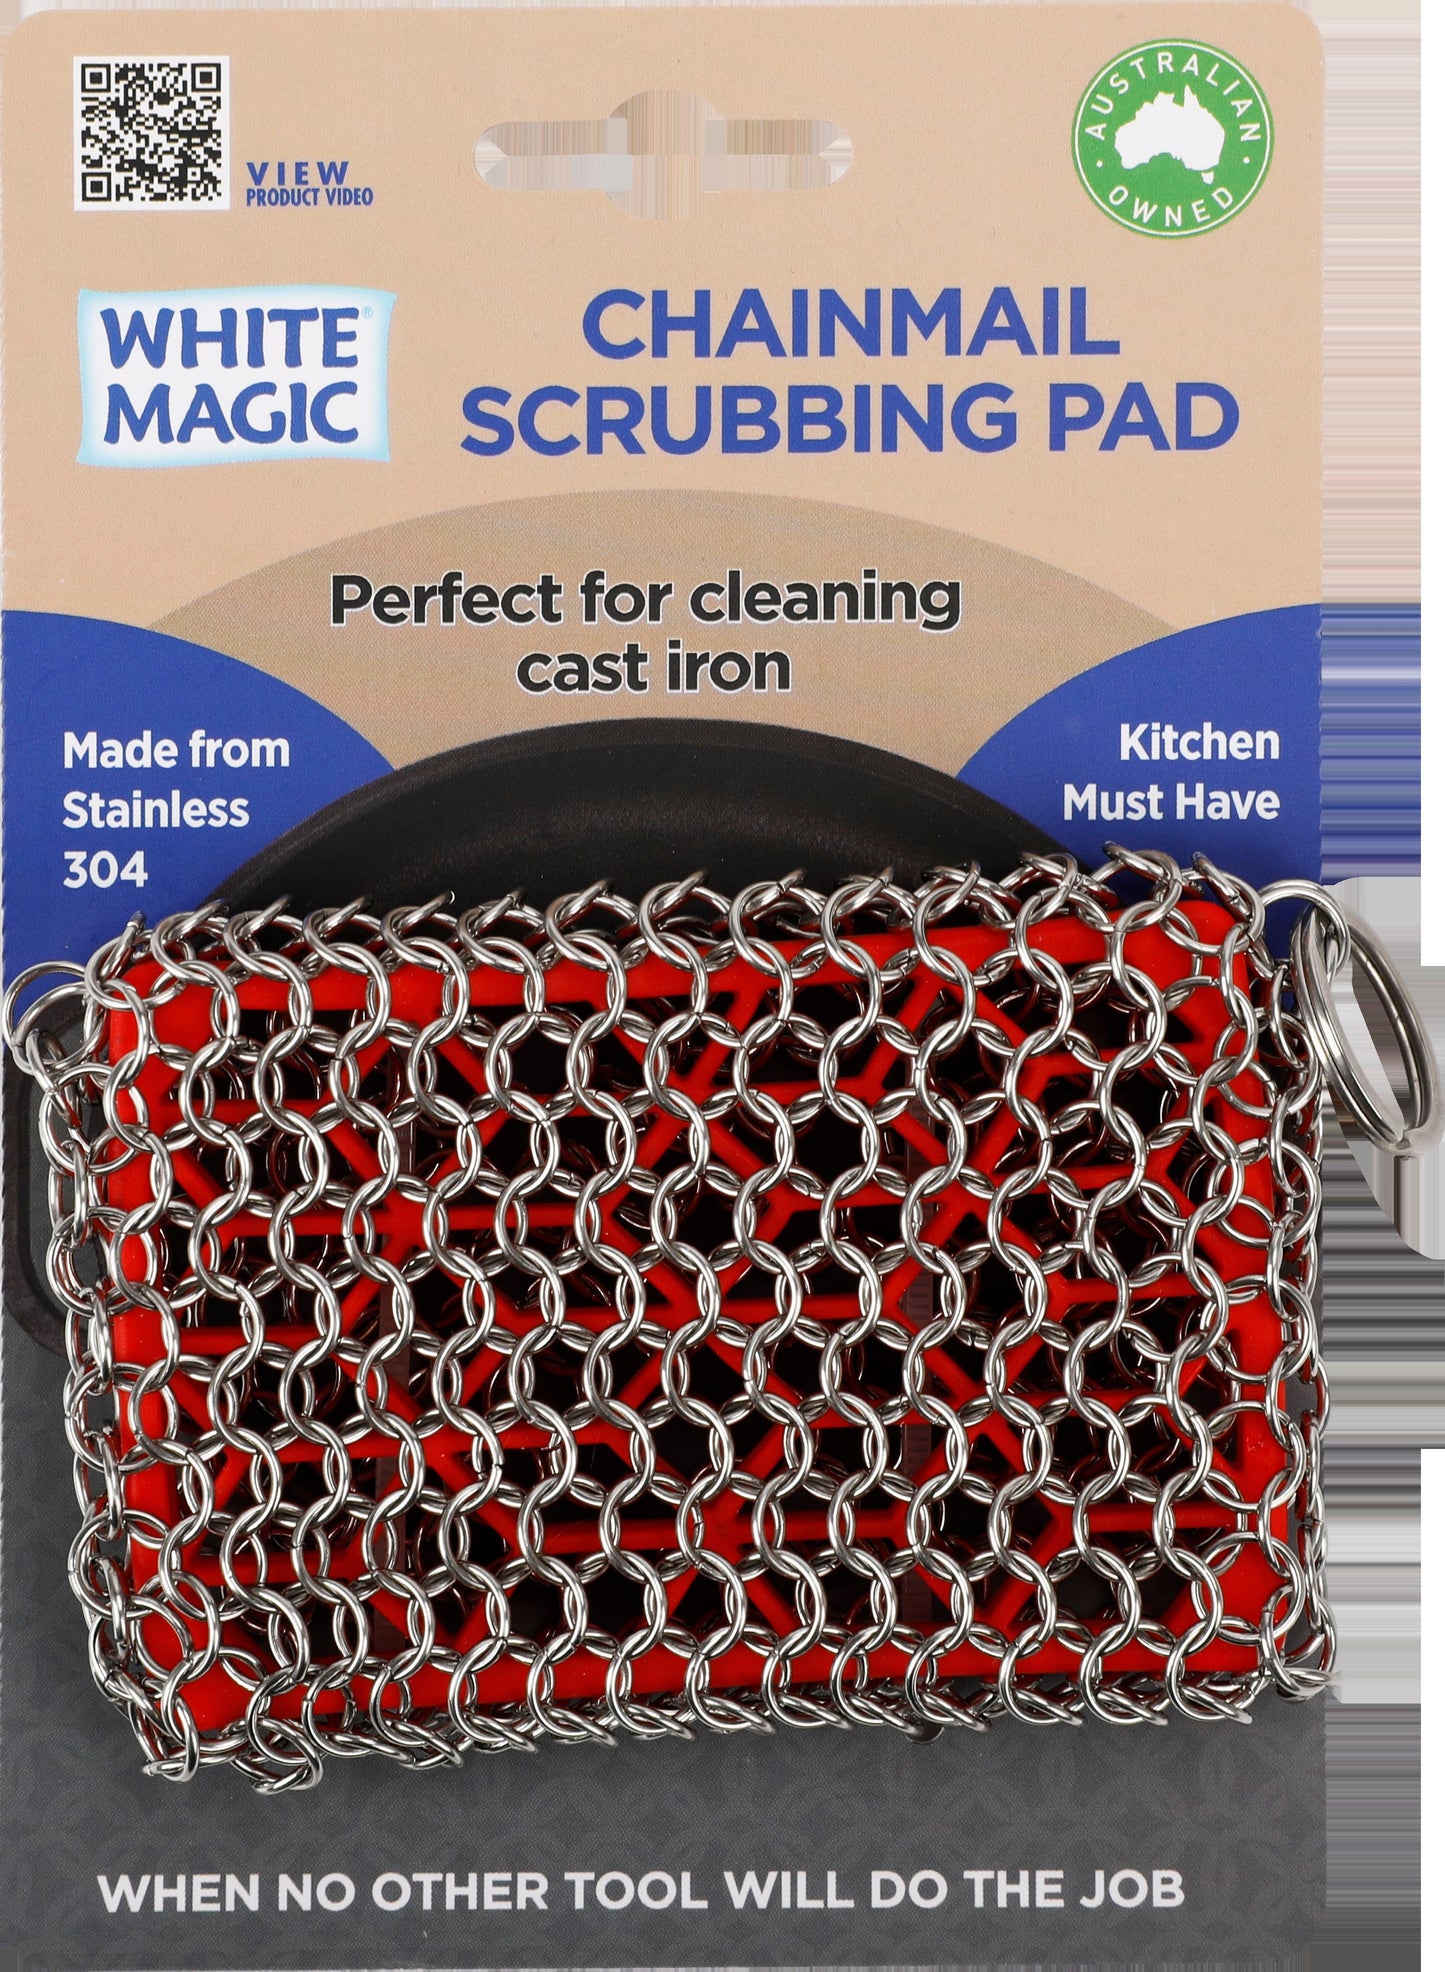 White Magic Chainmail Scrubbing Pad